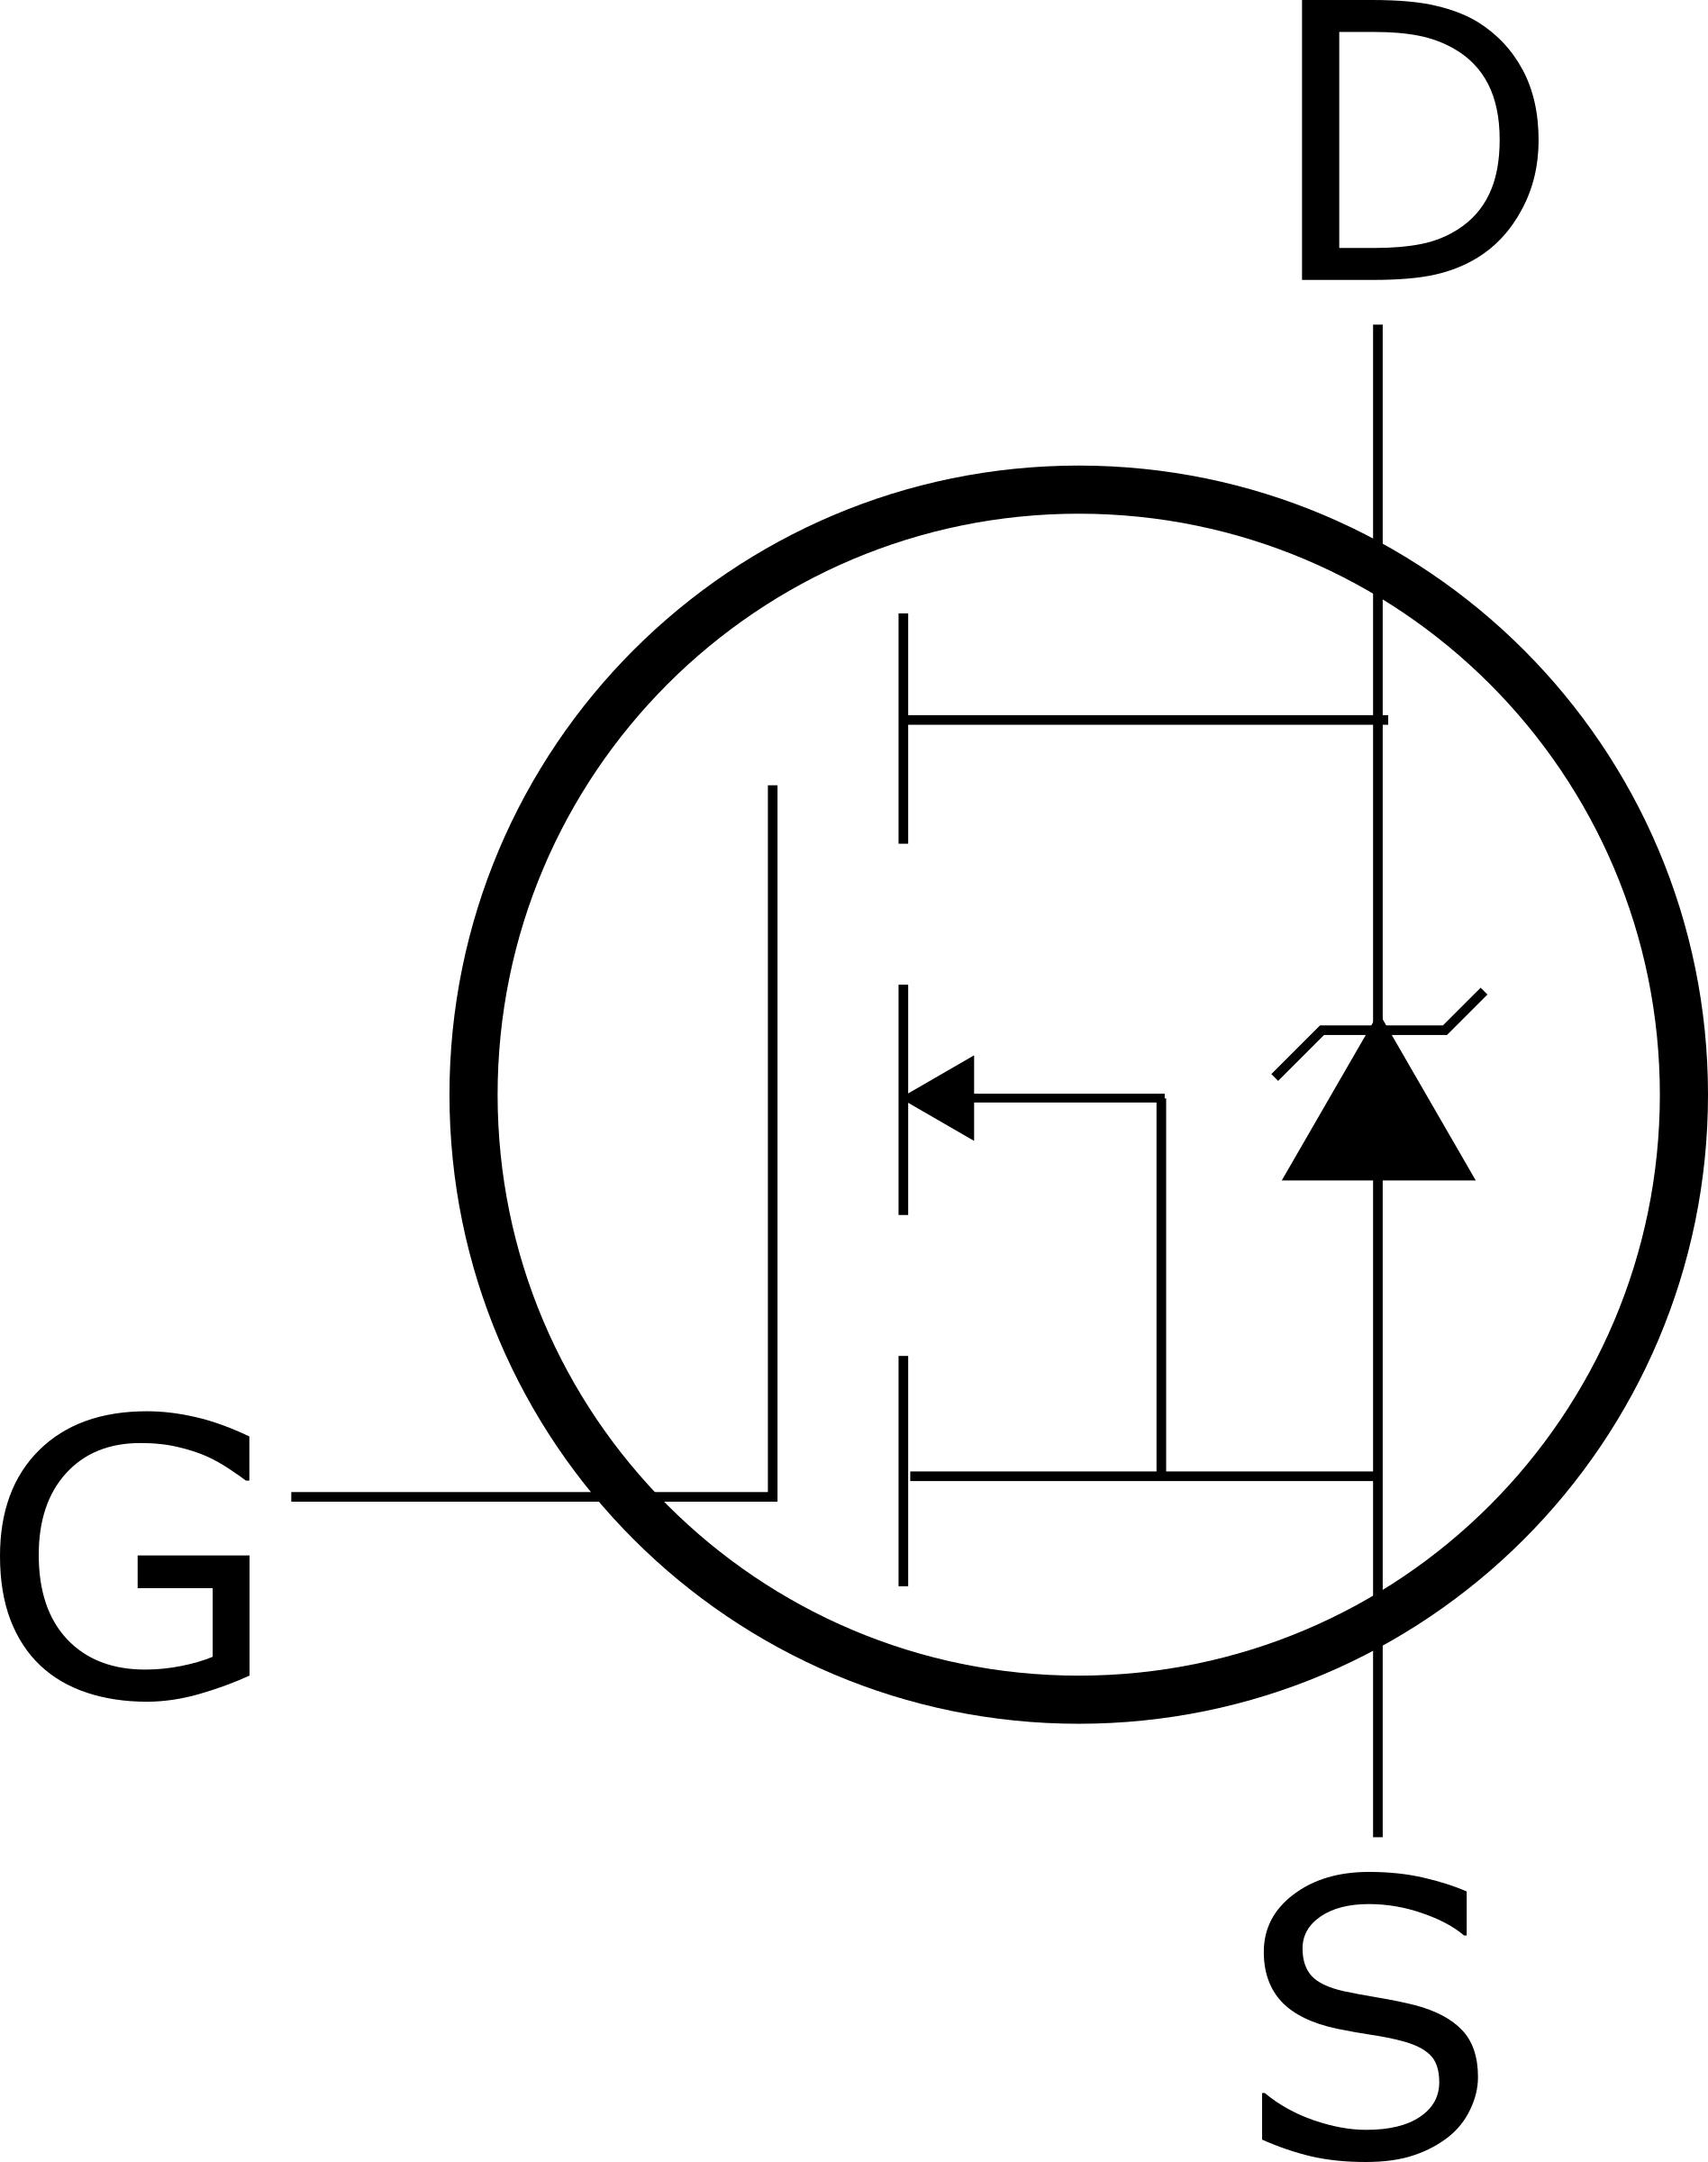 N-Ch. FET Schematic Symbol png